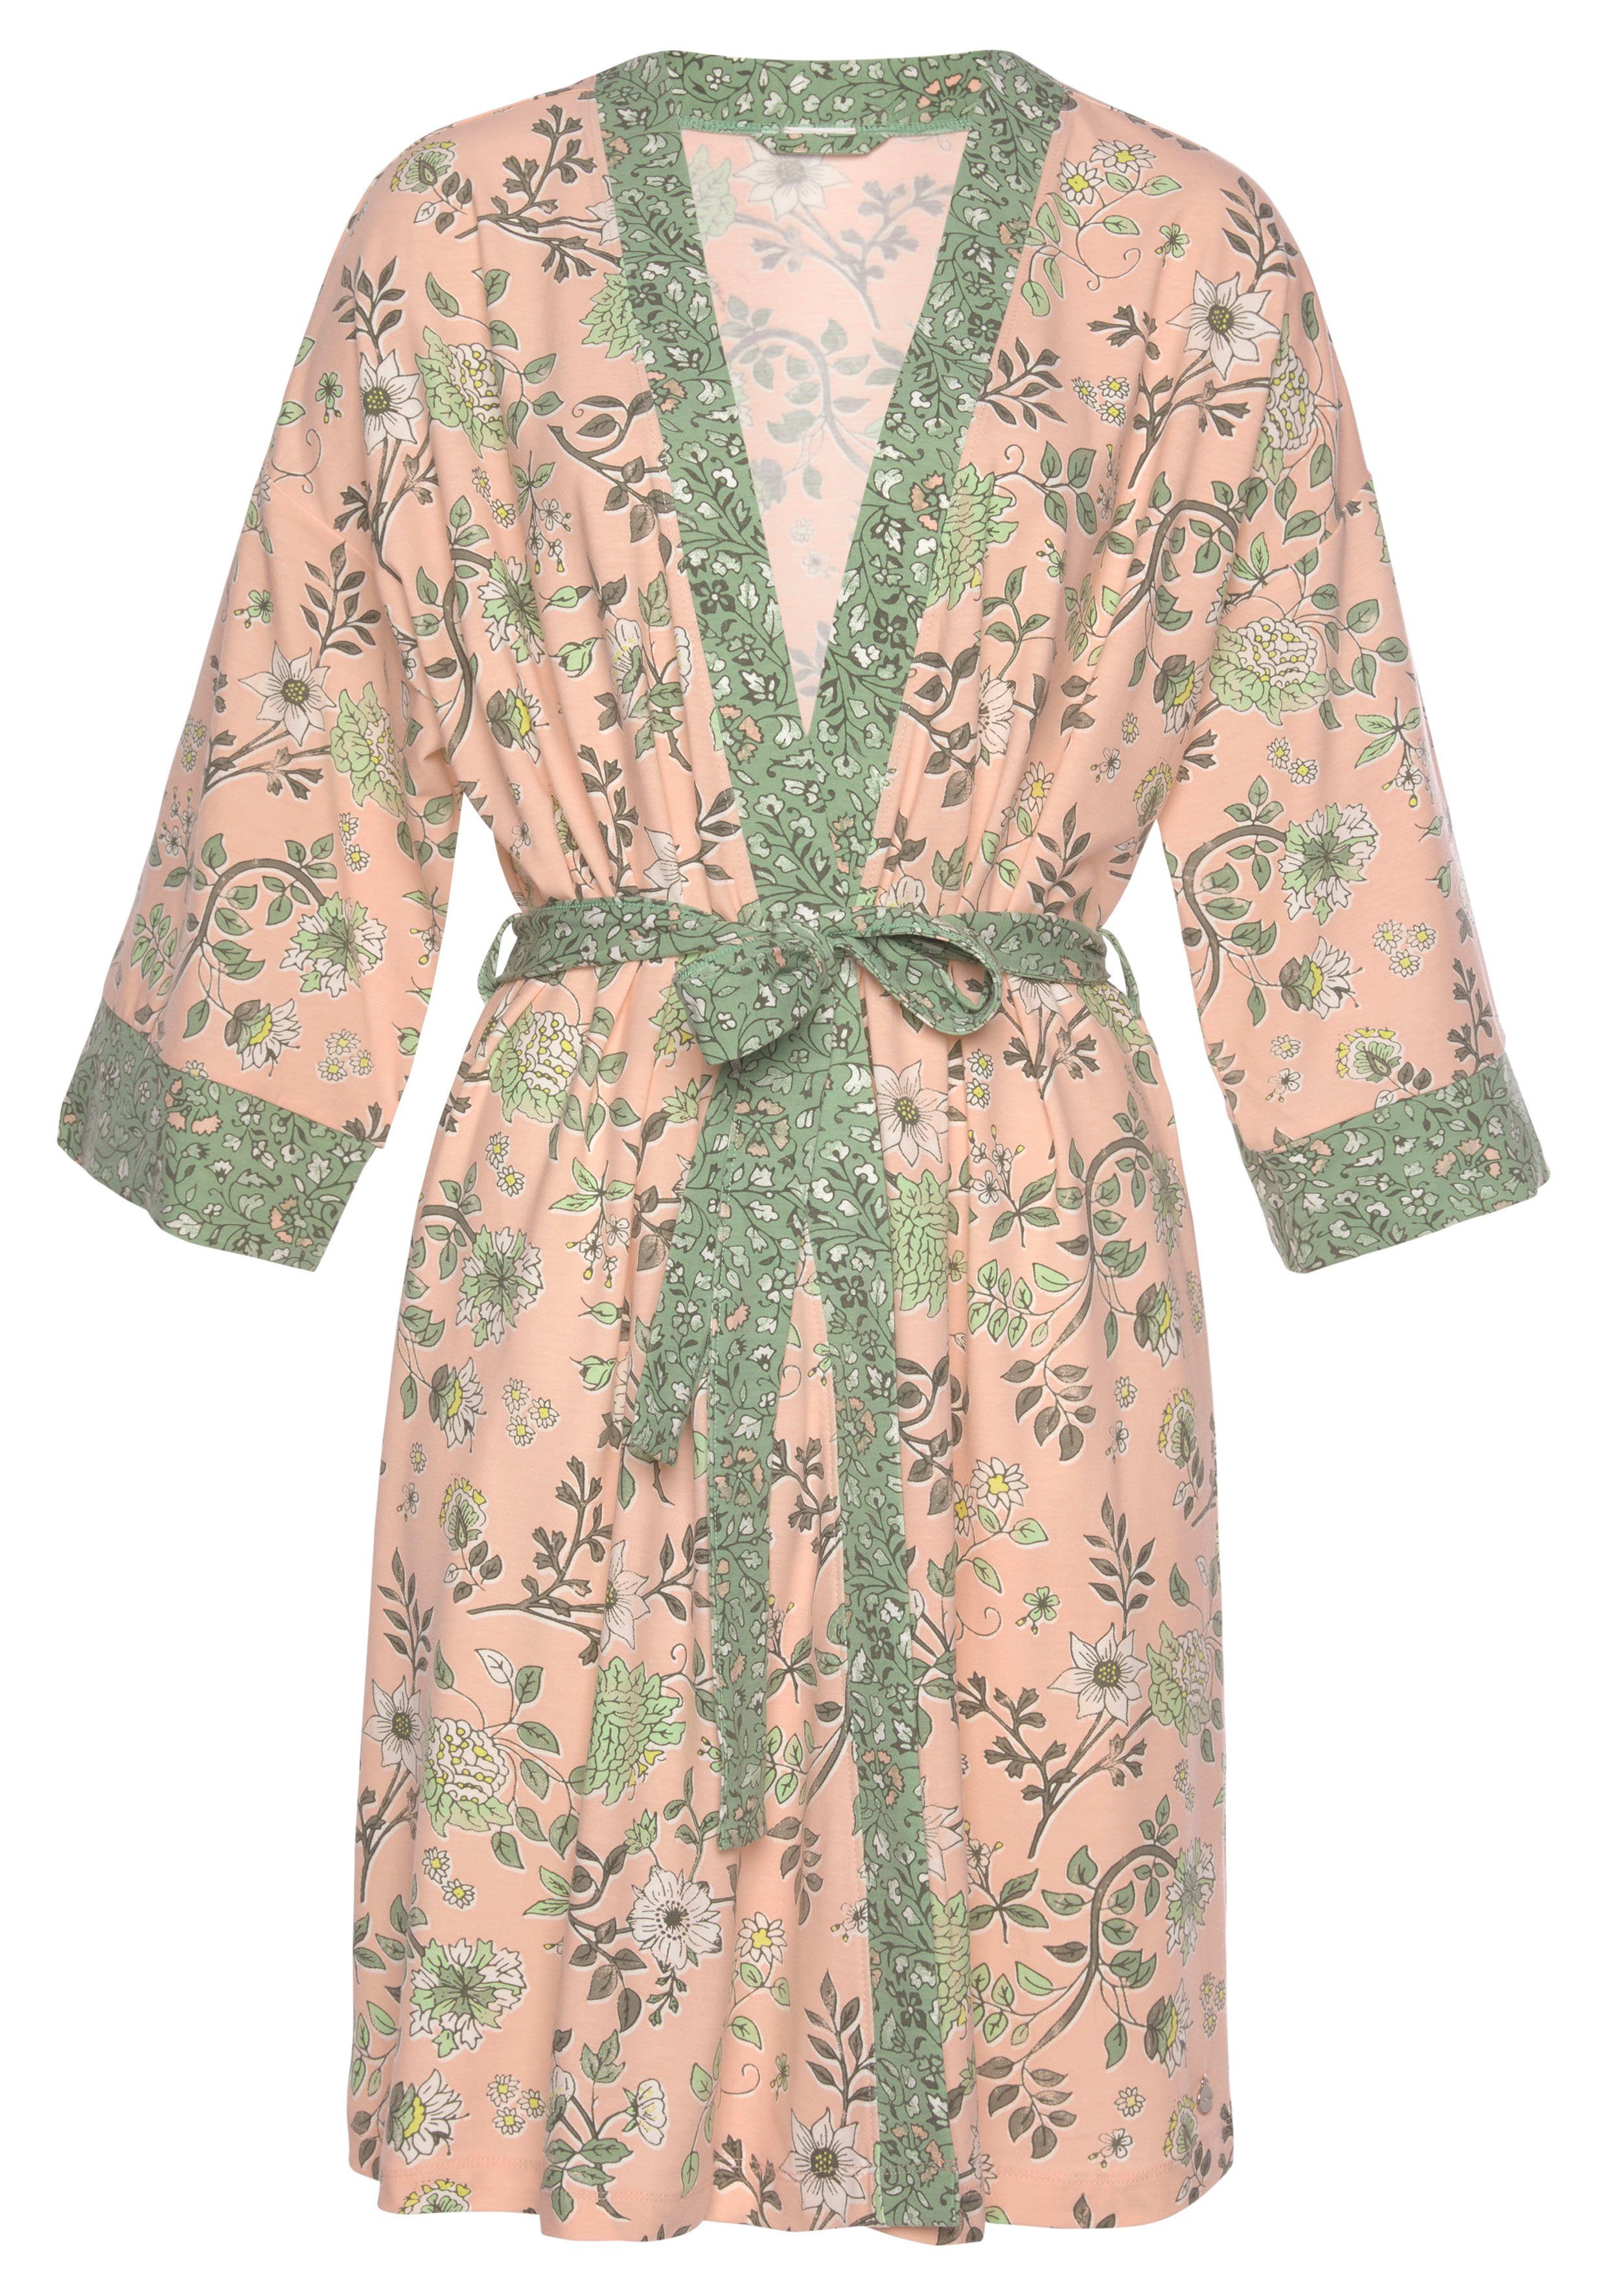 Allover-Druck Blumen mit nude-schilfgrün LASCANA Kimono-Kragen, Kurzform, Kimono, Gürtel, Jersey,